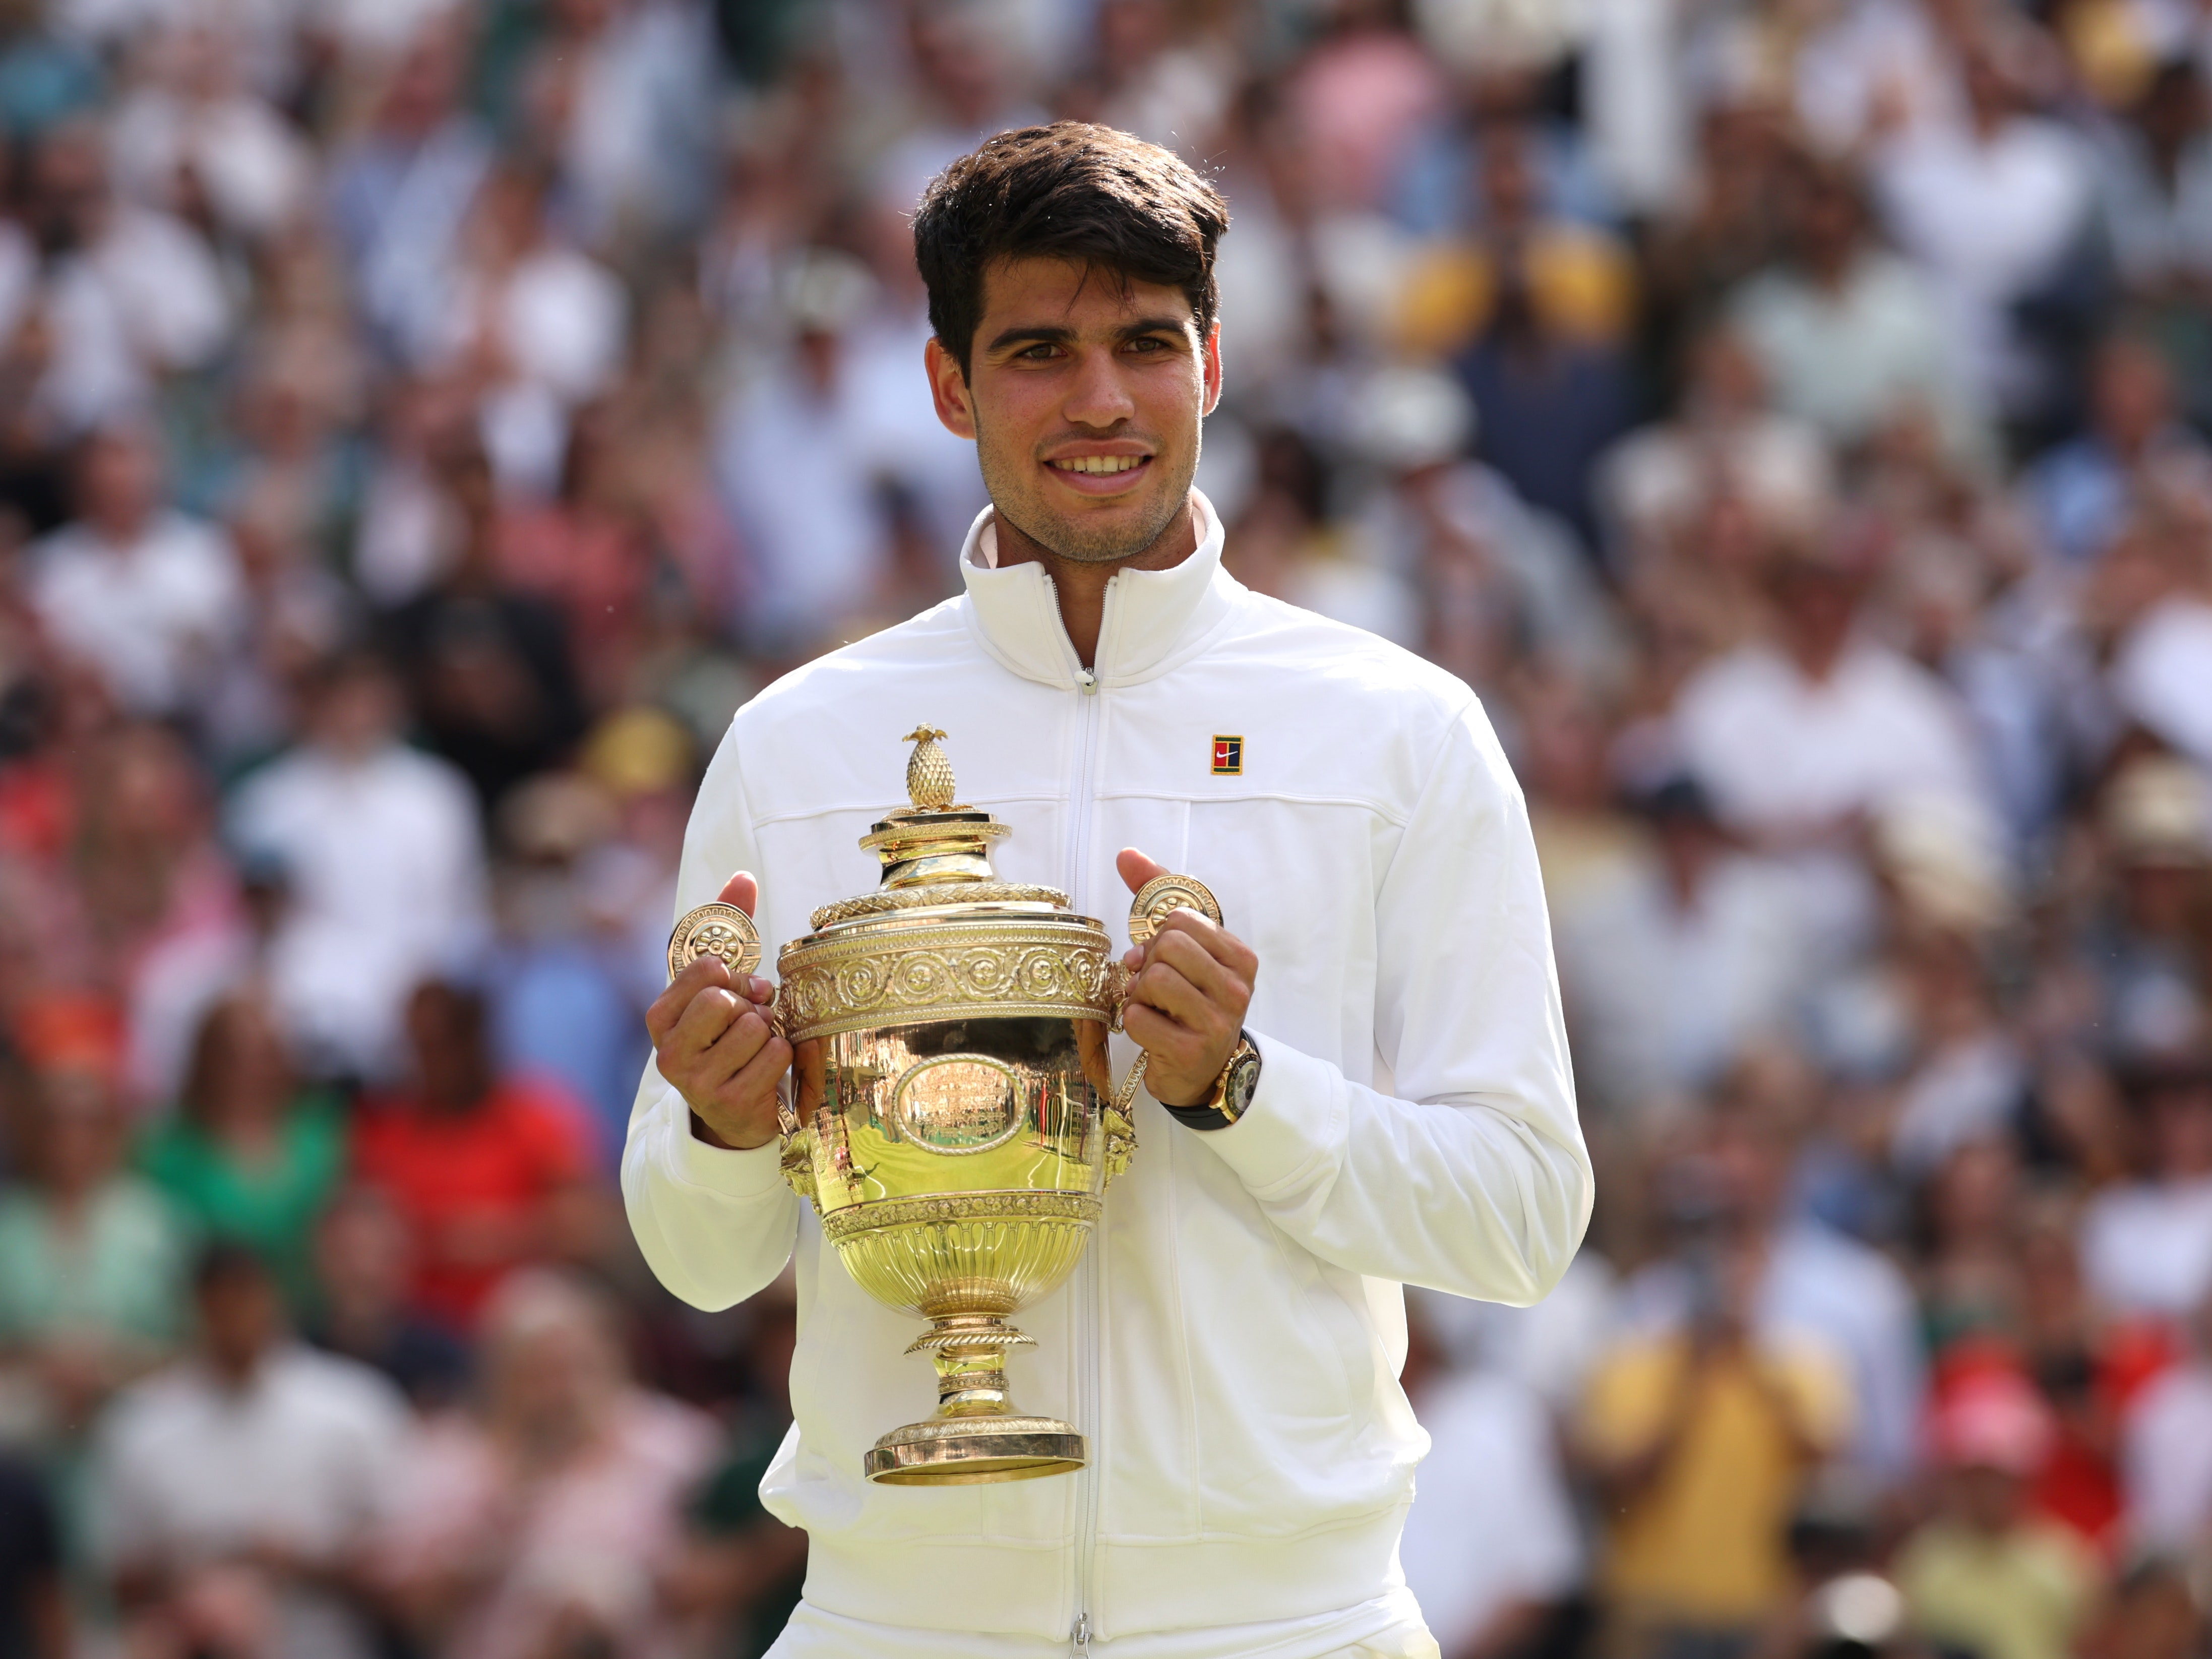 Under a Royal Watch, Carlos Alcaraz Wins Another Wimbledon Title